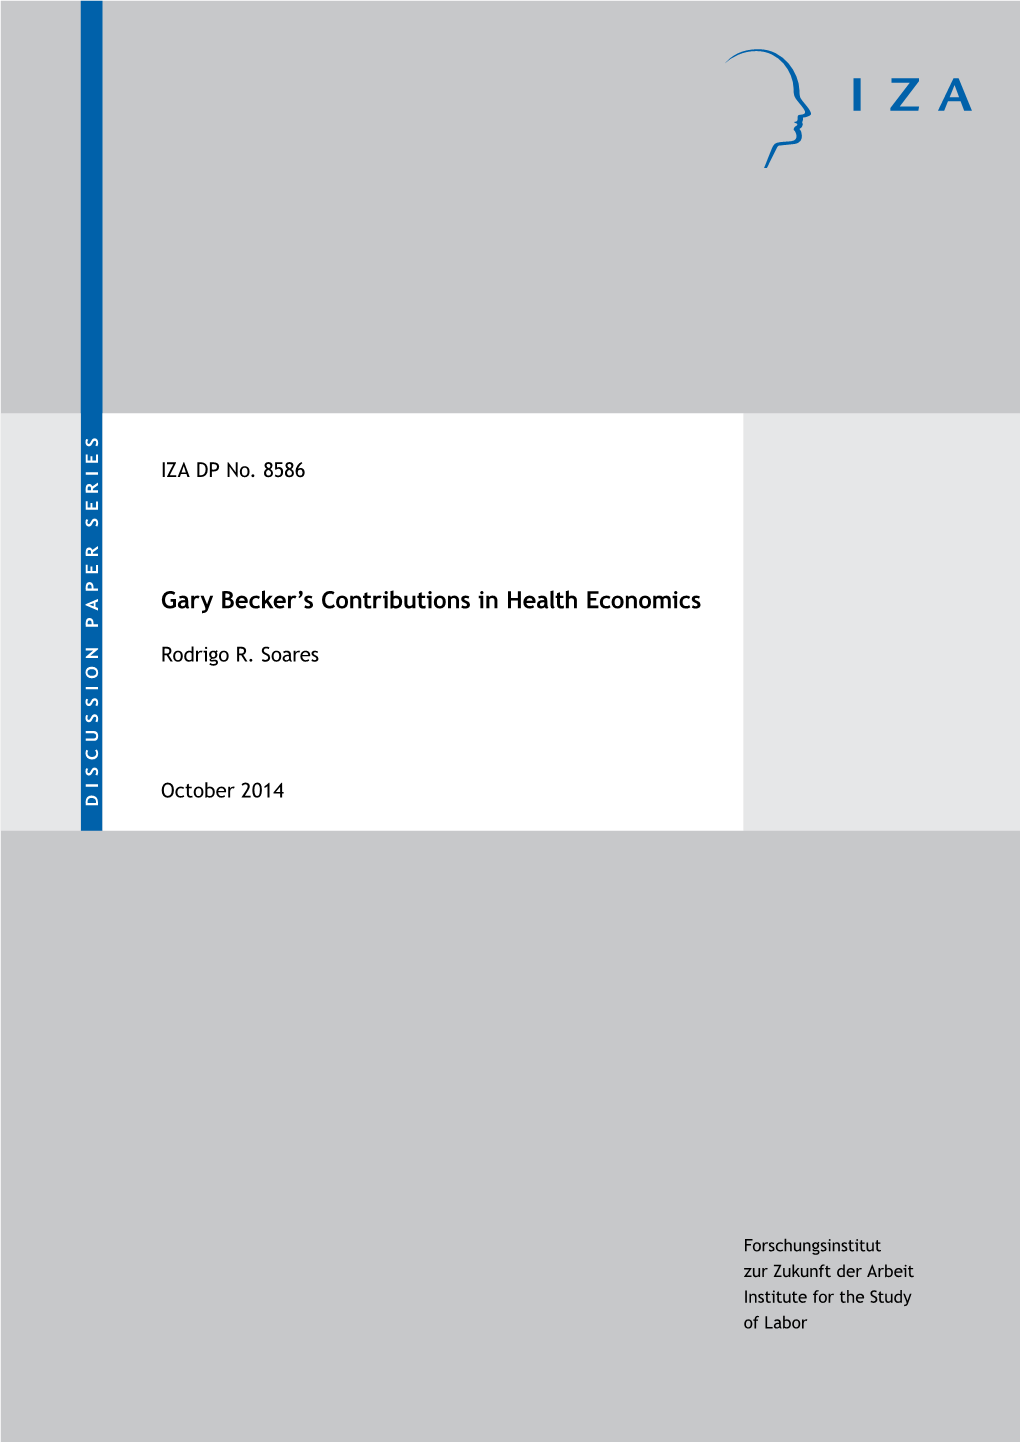 Gary Becker's Contributions in Health Economics